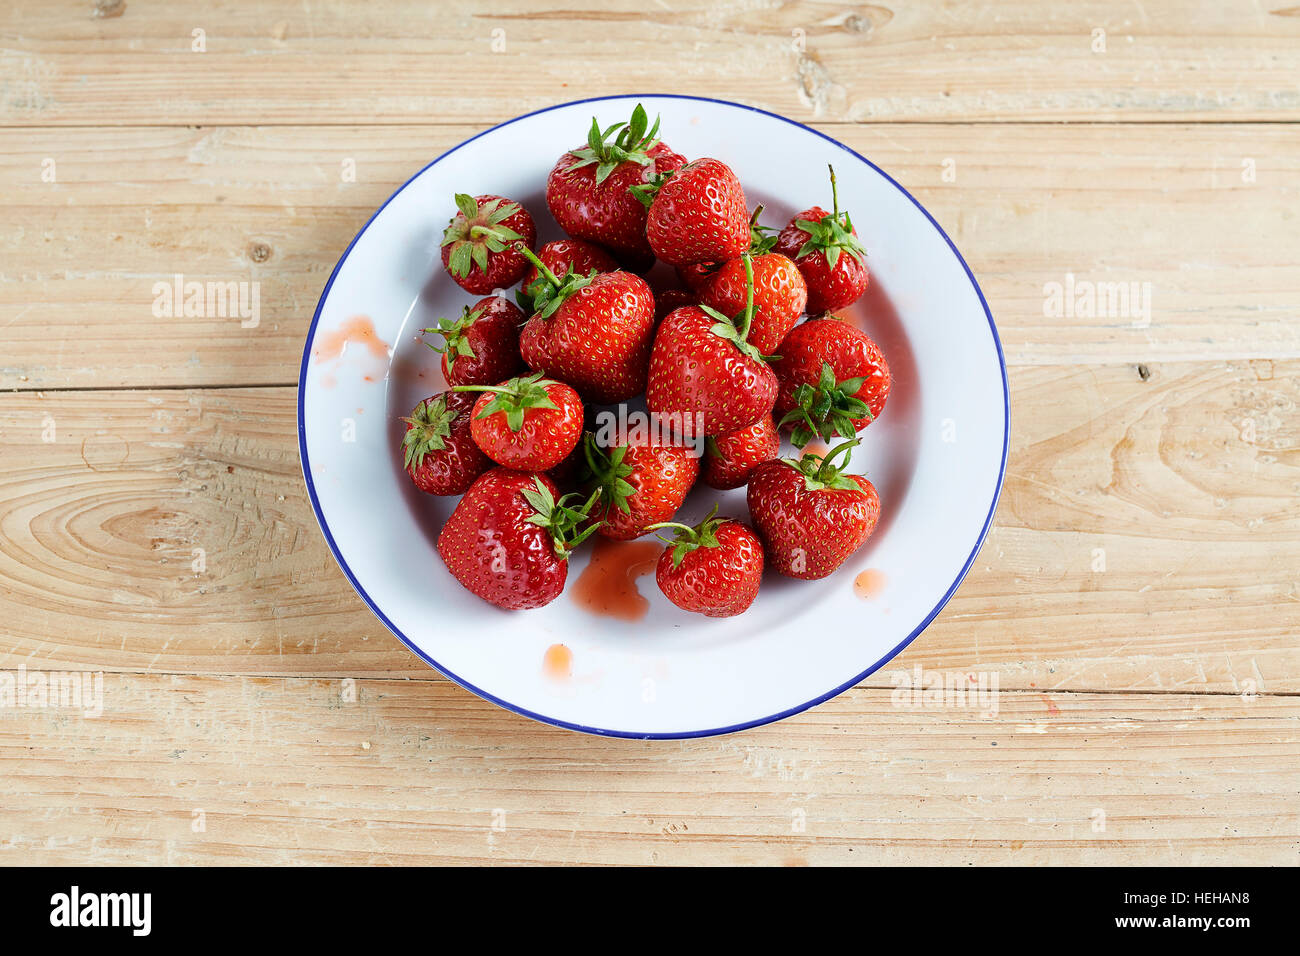 strawberries fruit red portion stalks fresh picked white skin pale wooden table top abundant offering giving Strawberry white enamel plate Fragaria Stock Photo